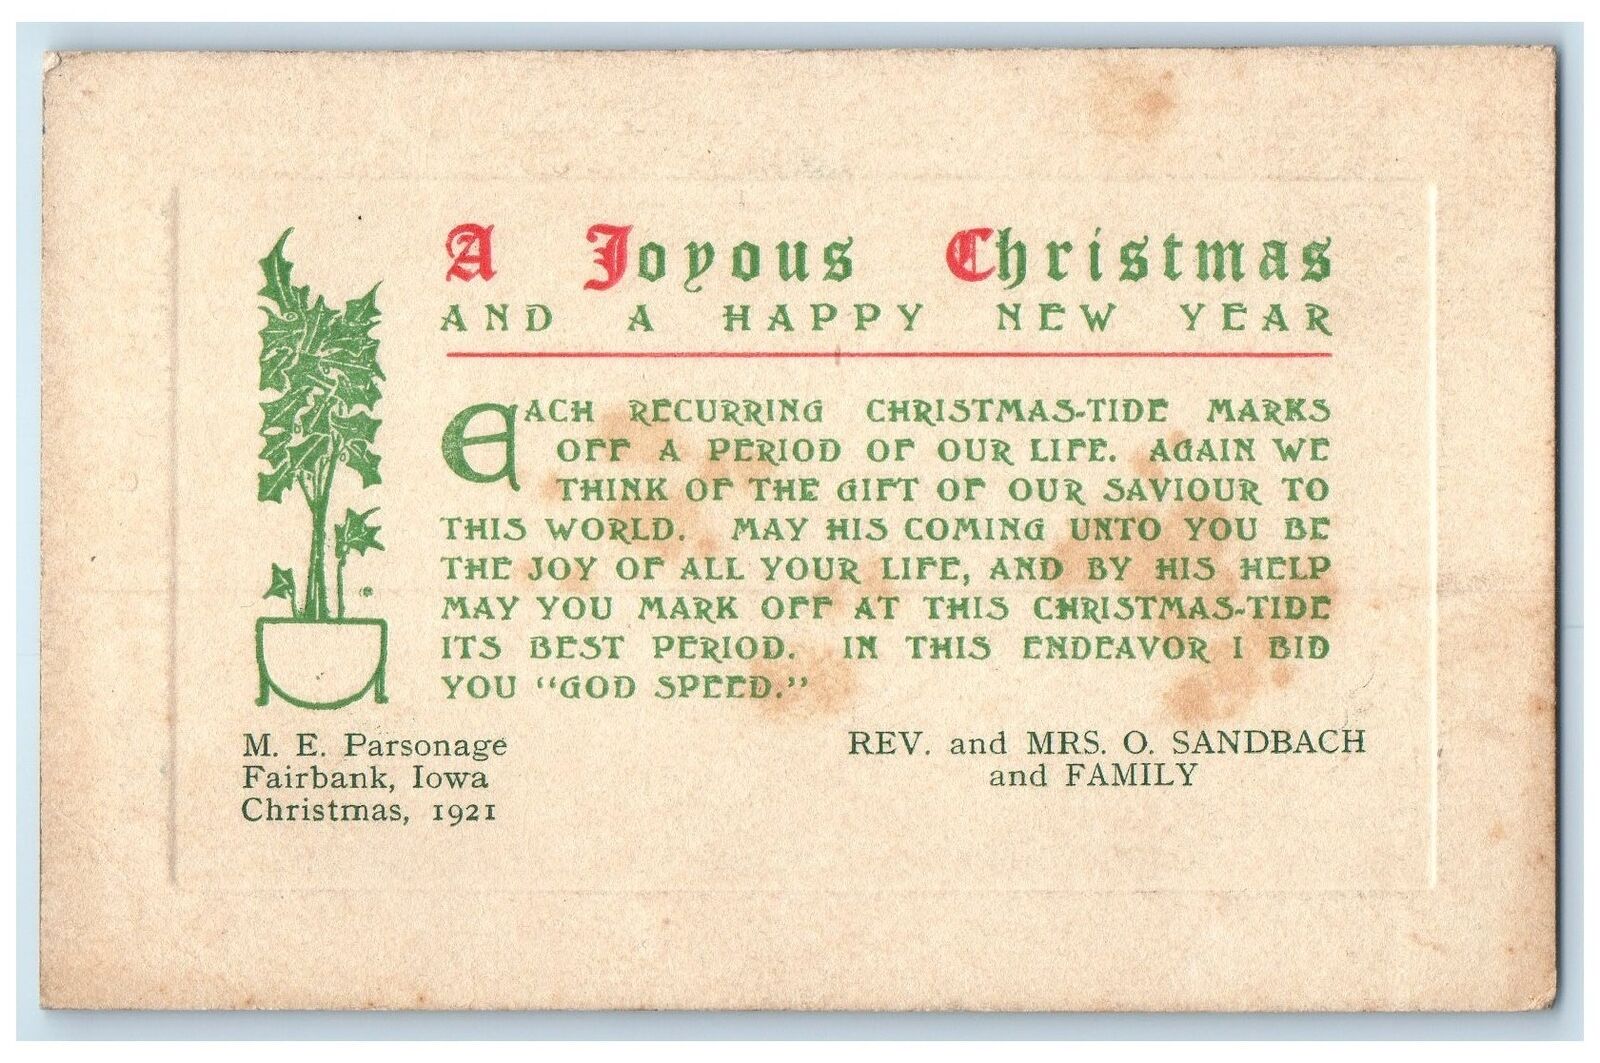 1921 Methodist Episco. Parsonage Christmas 1921 Greetings Fairbank Iowa Postcard